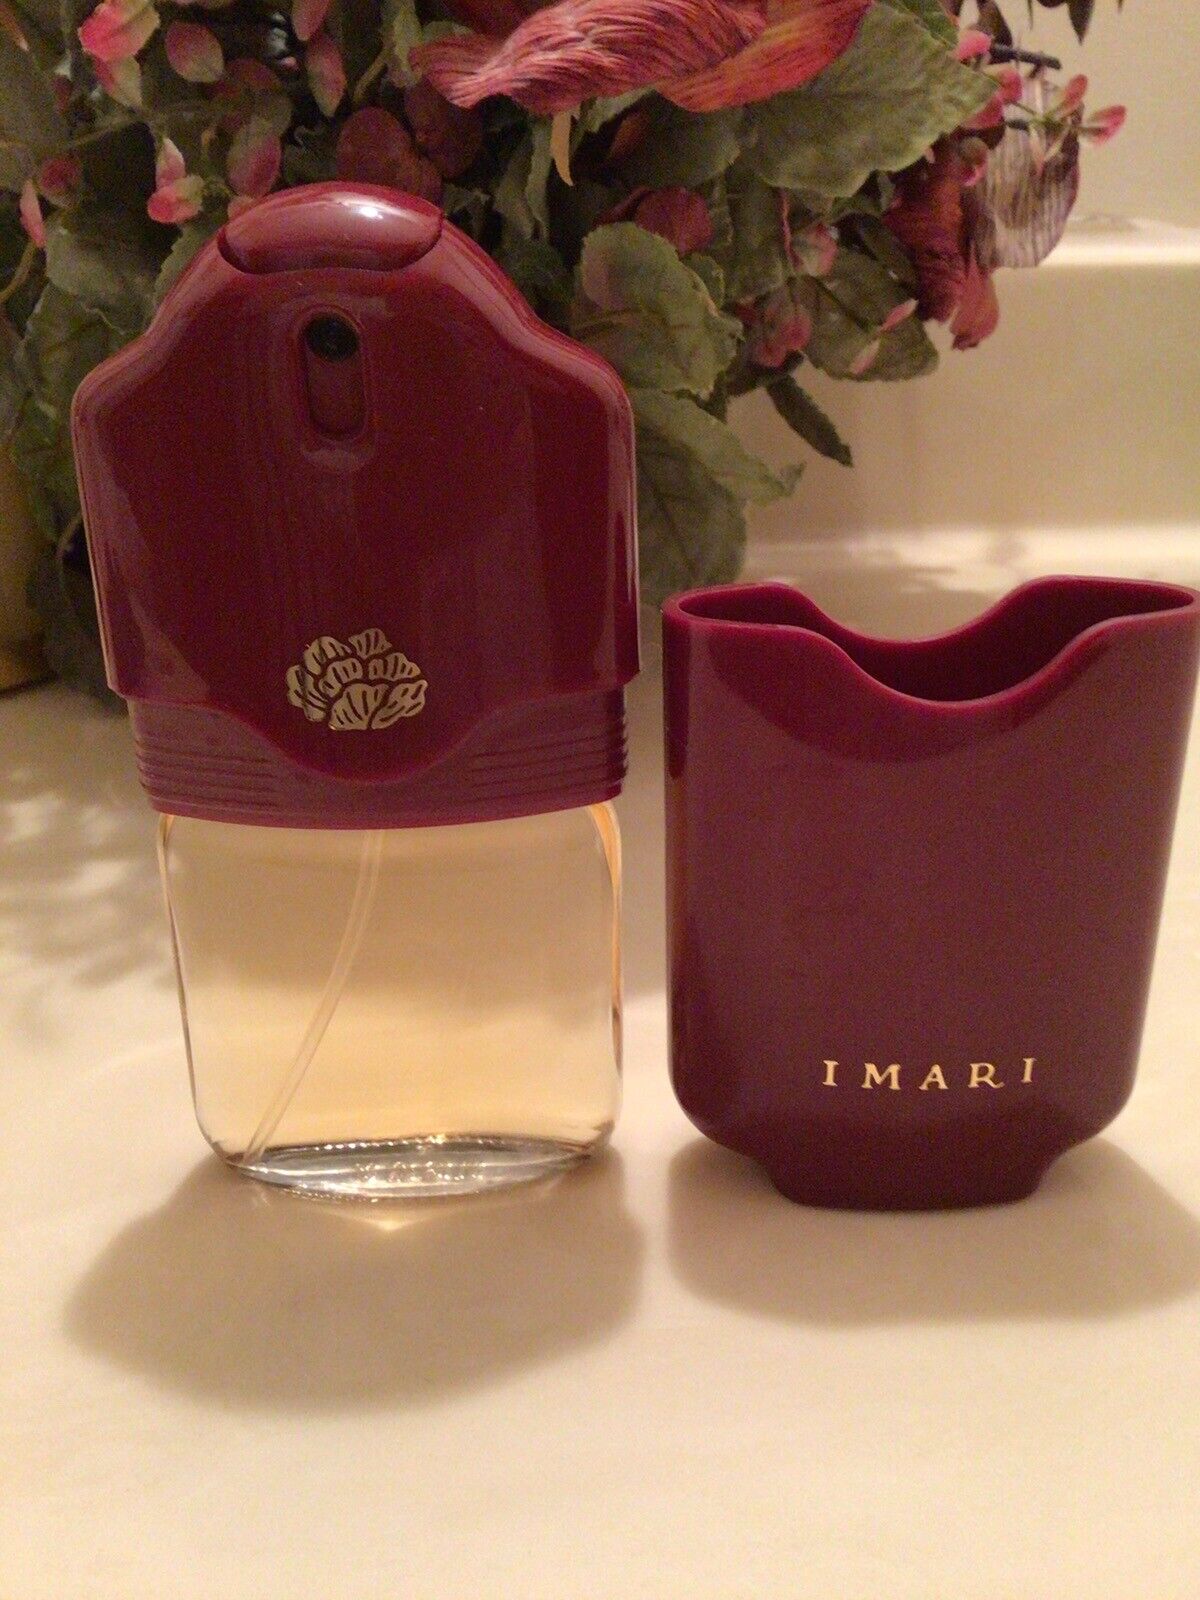 AVON IMARI Eau de Cologne Spray 1.2 fl oz Women\'s Perfume *RARE From 1995 NOS